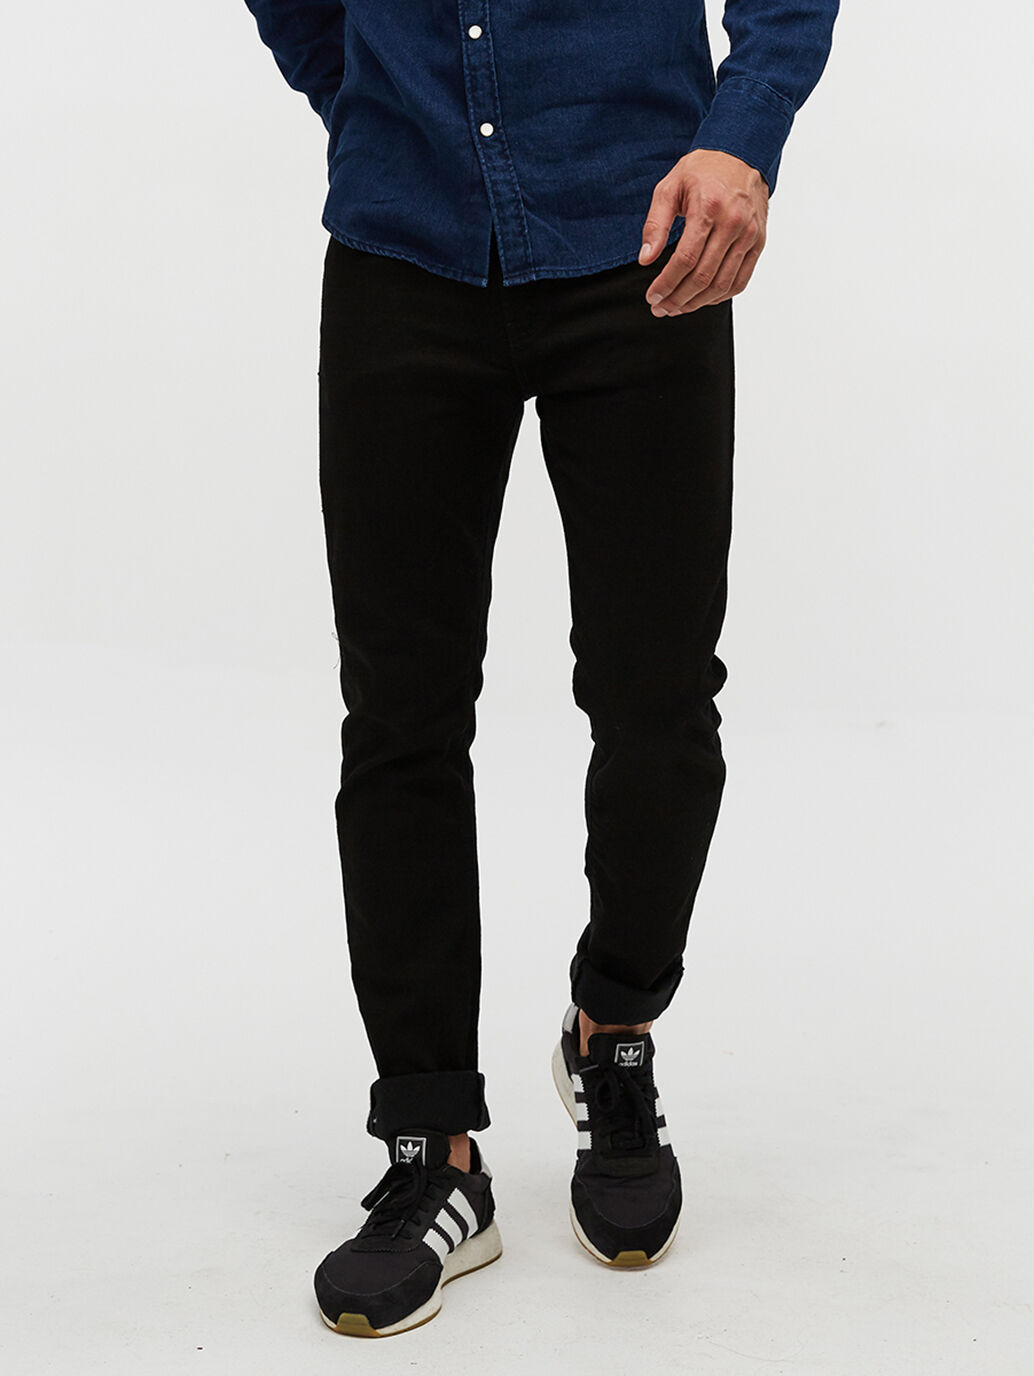 black skinny levi jeans